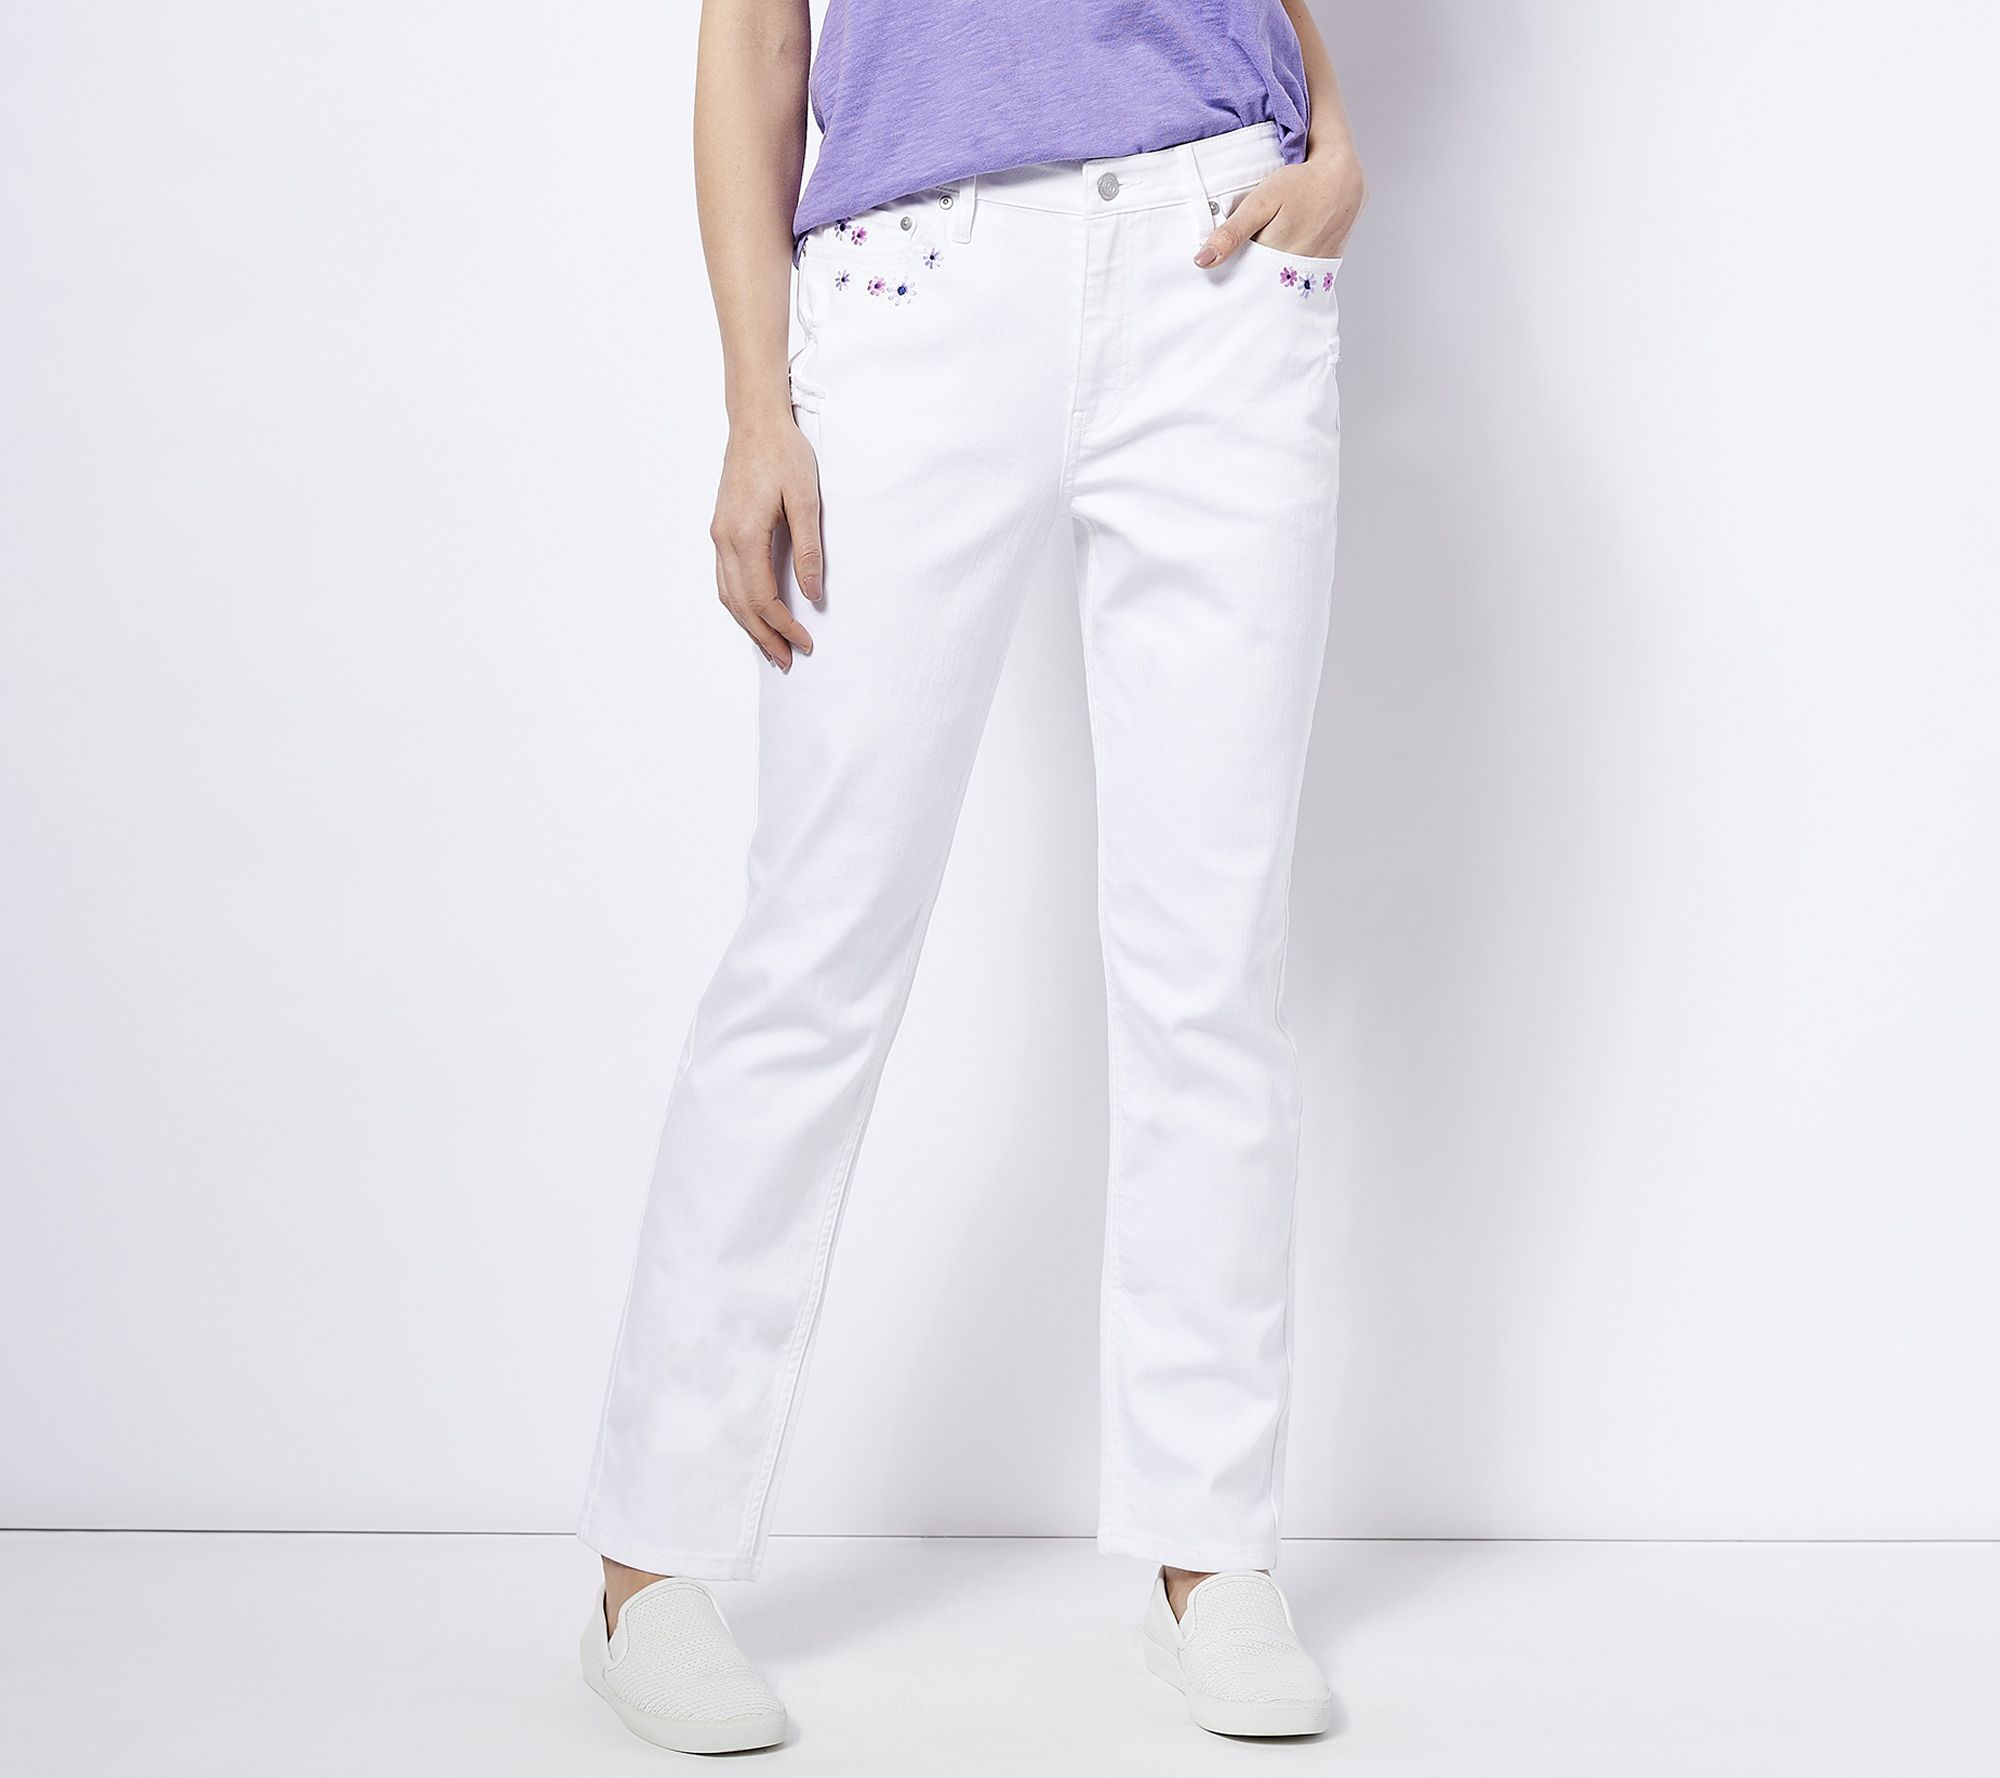 Candace Cameron Bure Petite Pacific DenimGirlfriend Jean- Women's Jeans White